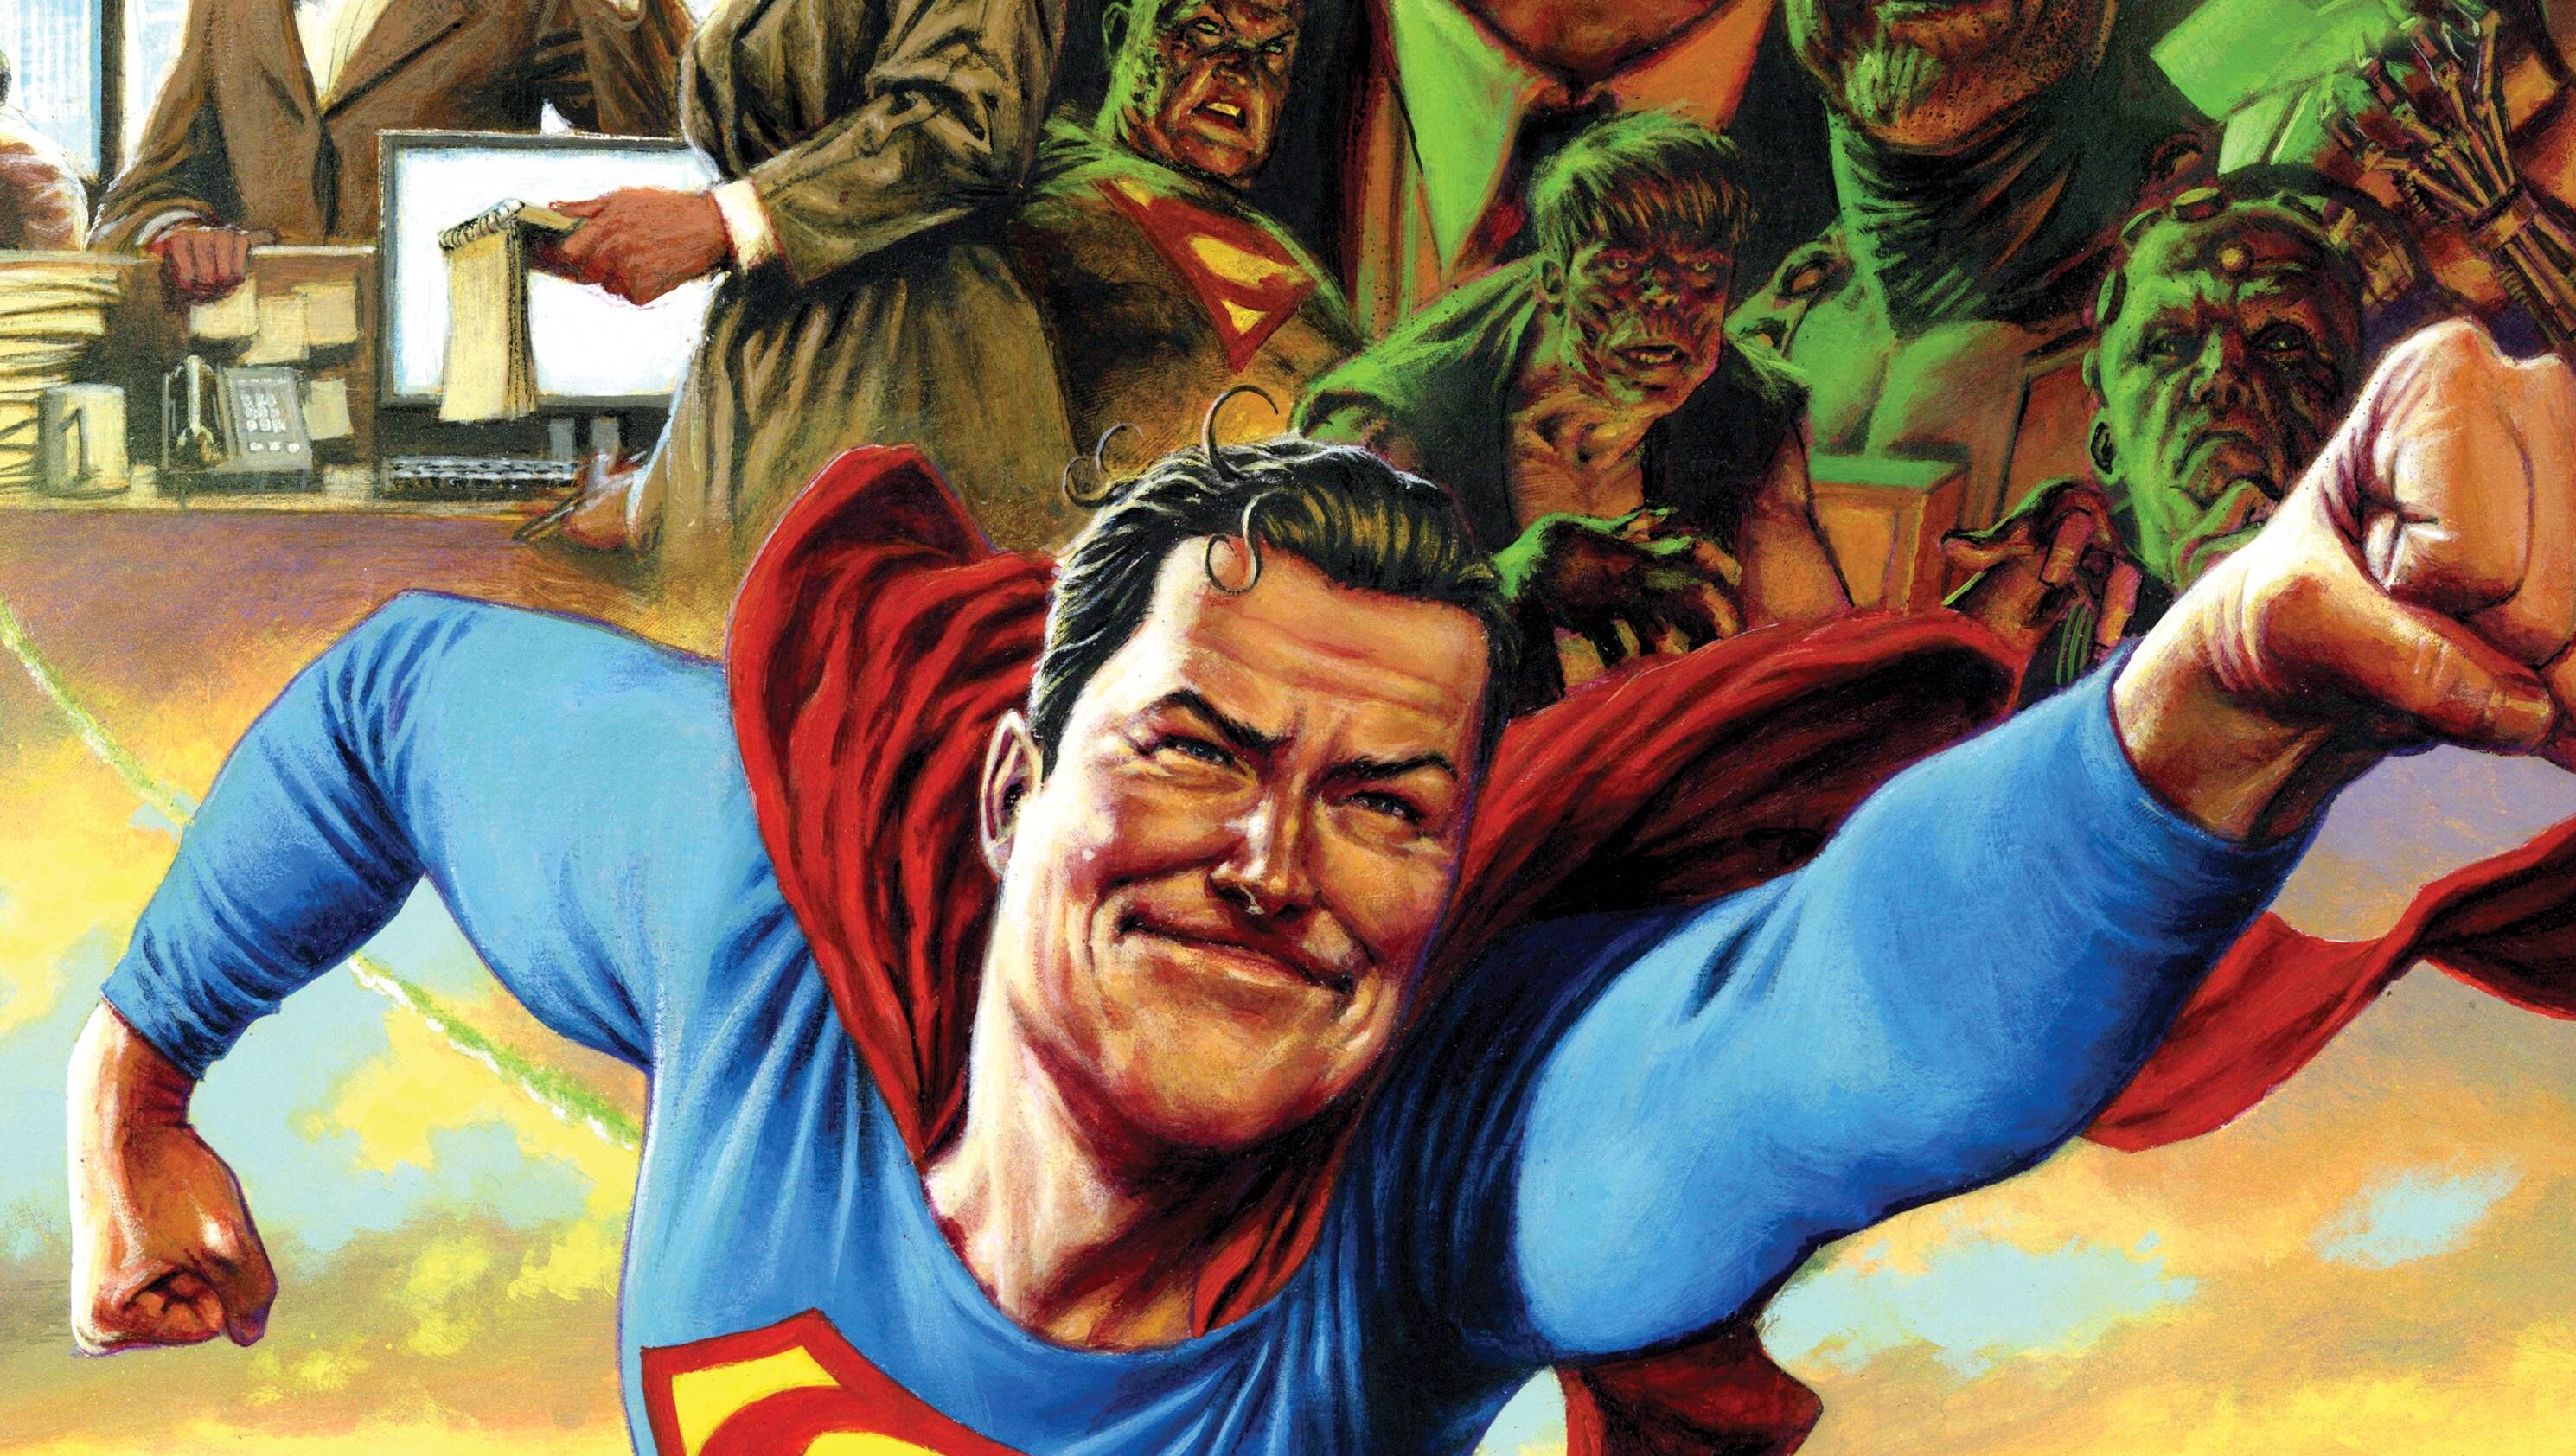 Action Comics #1047 Banner